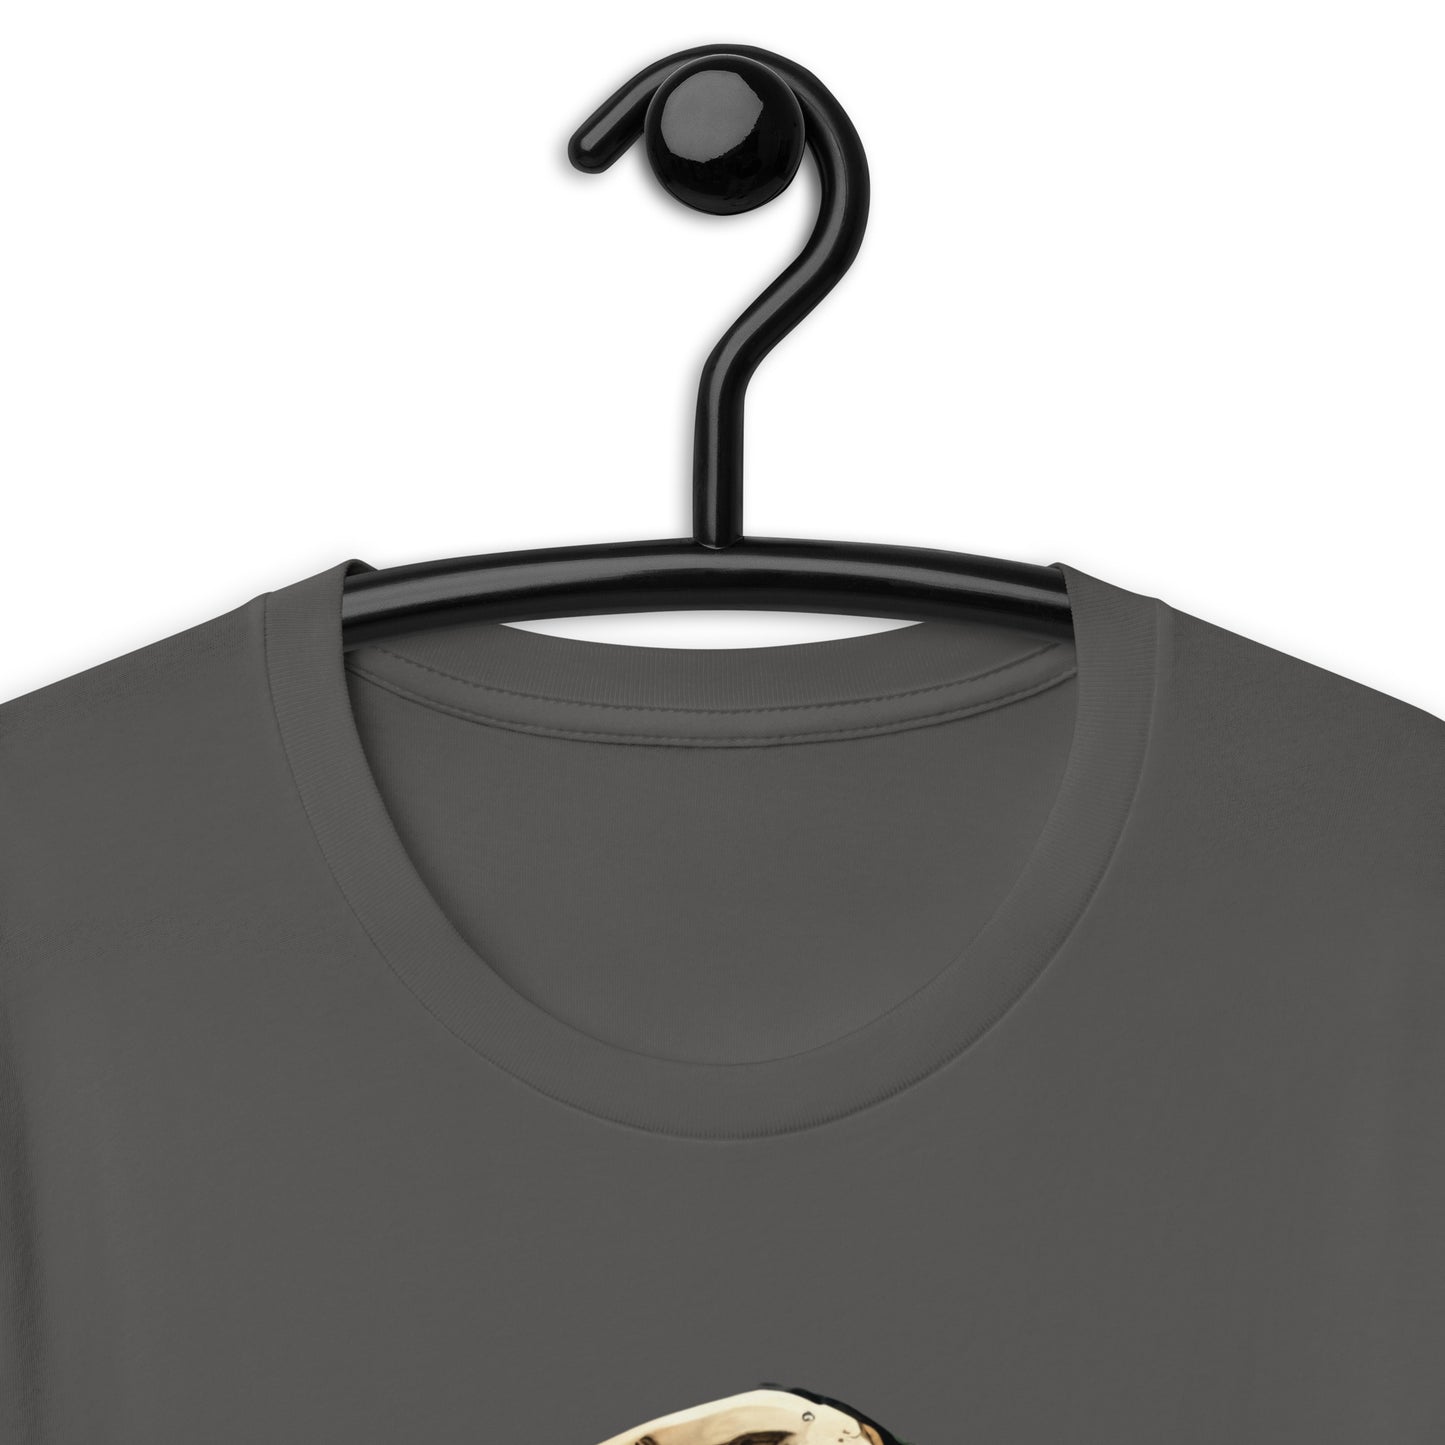 Mushroom head 1.0 Unisex t-shirt